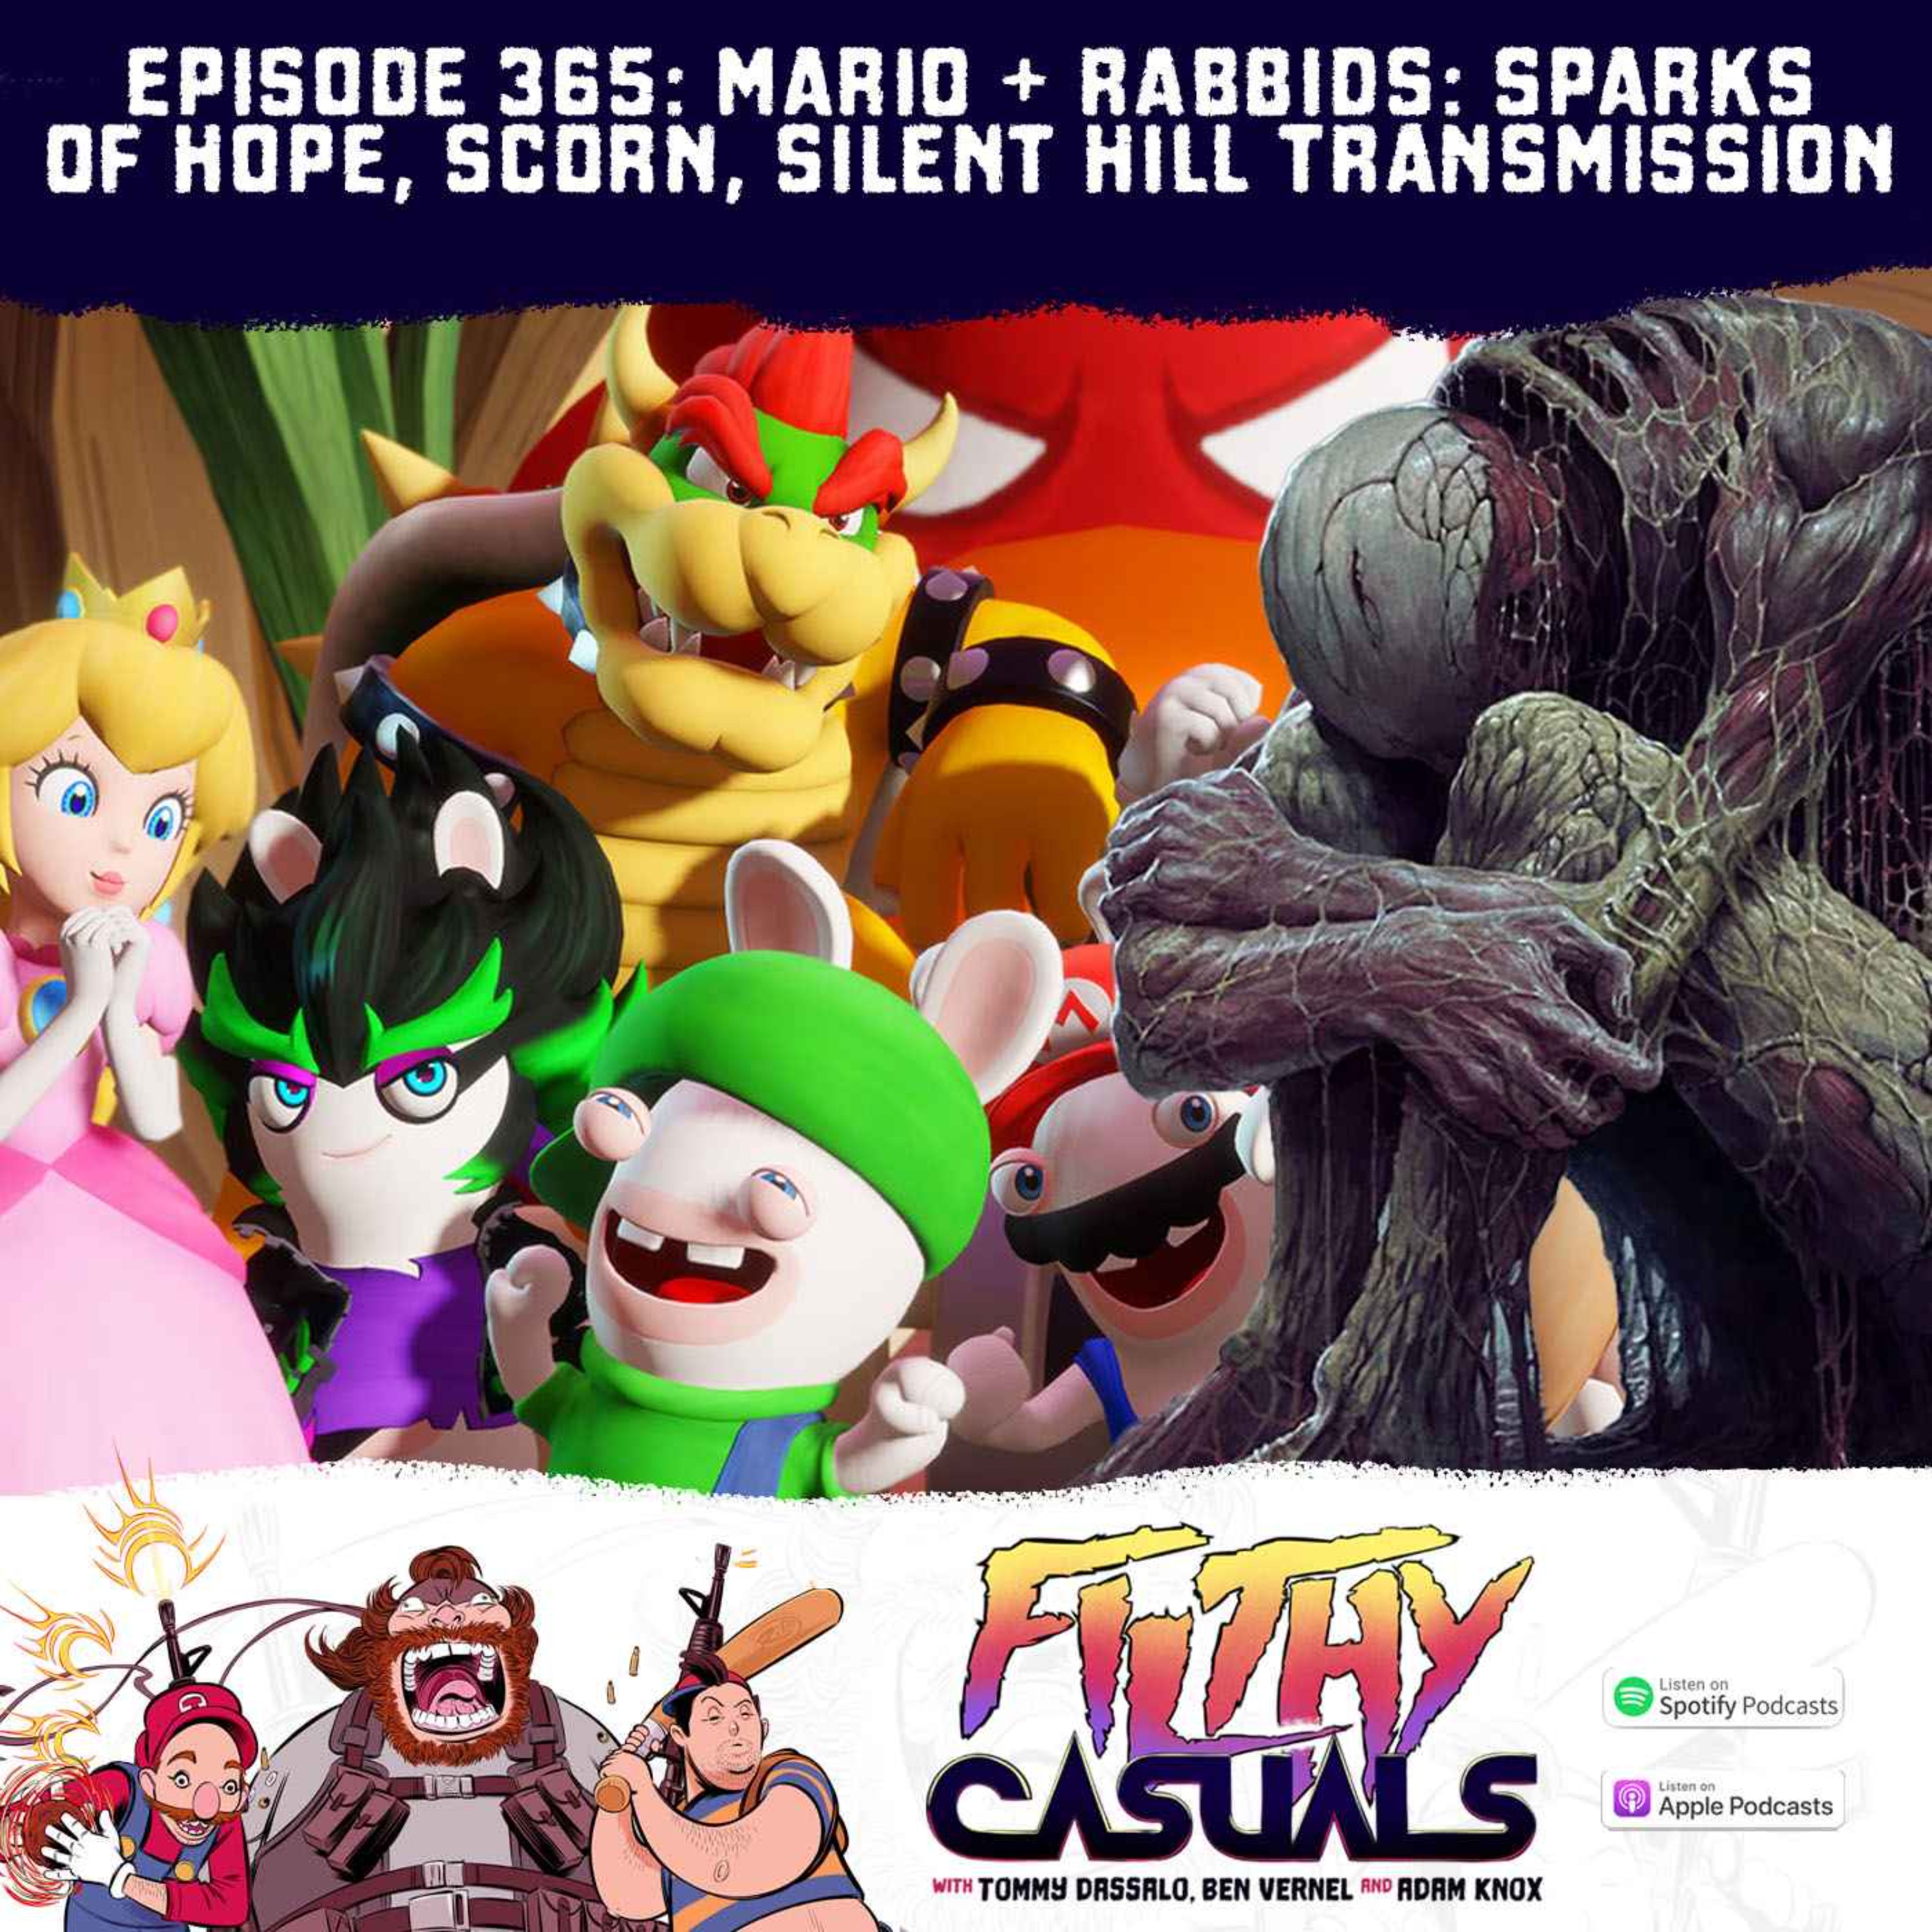 Episode 365: Mario + Rabbids: Sparks of Hope, Scorn, Silent Hill Transmission